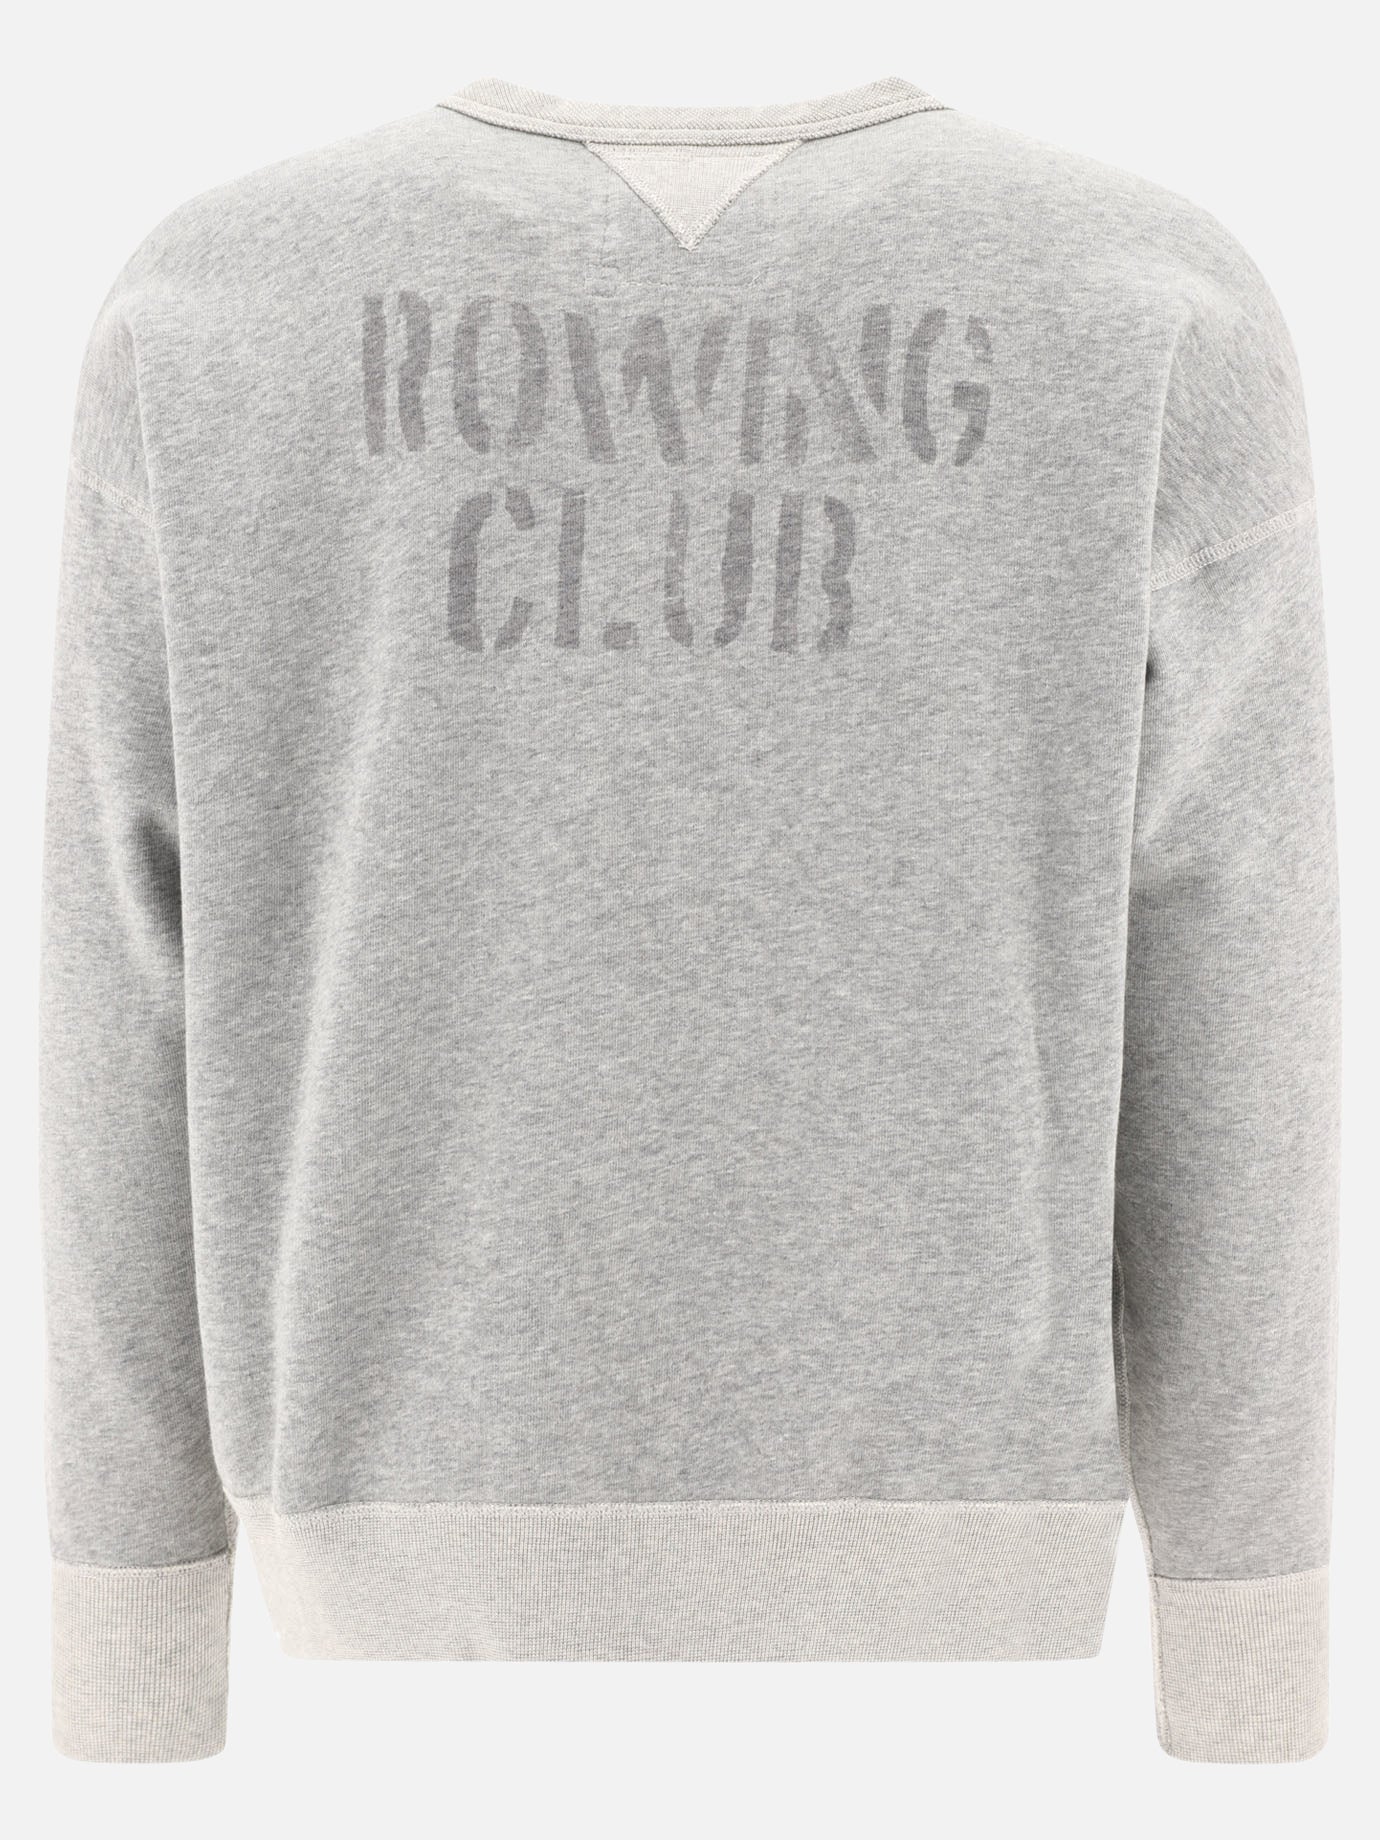 "Rowing Club" sweatshirt